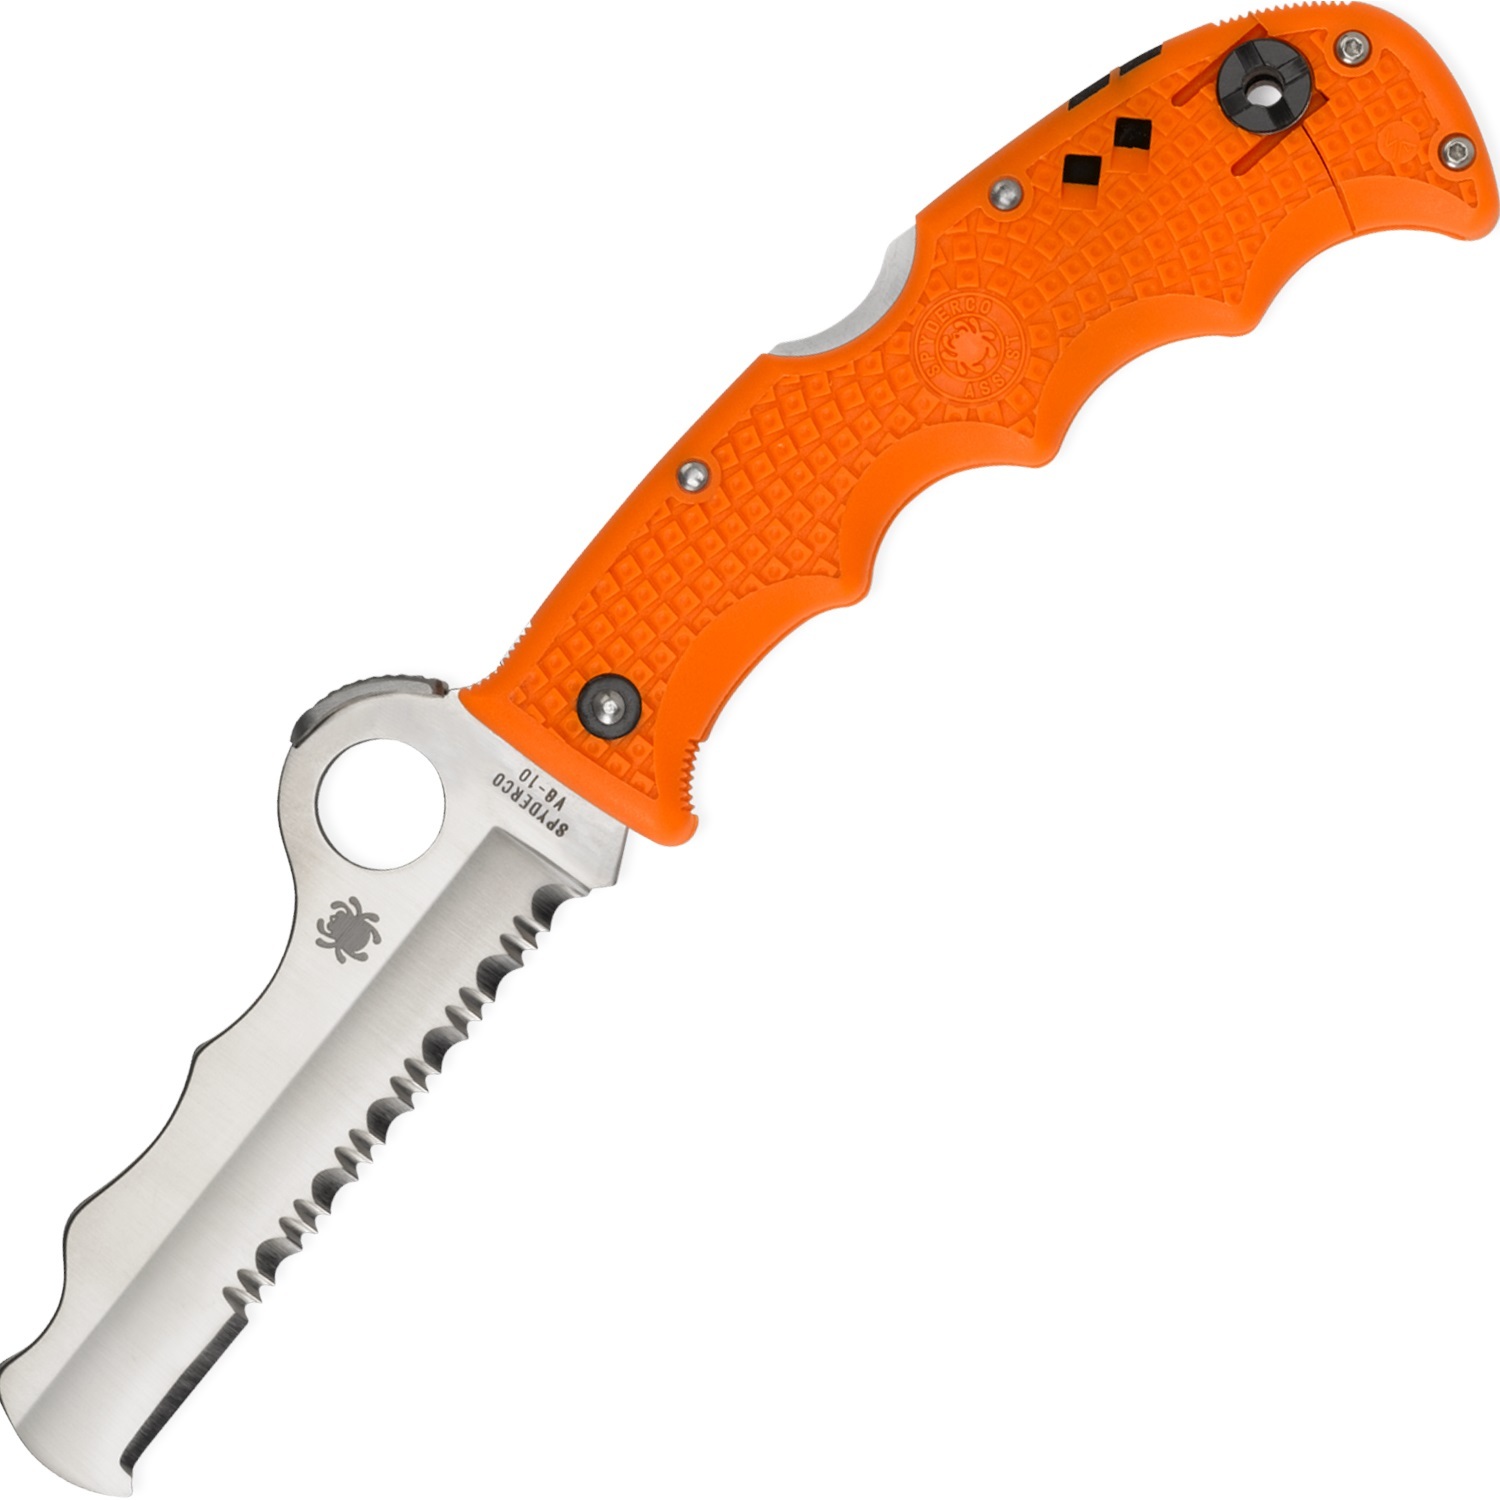 Складной нож Rescue Assist™ Orange - Spyderco 79PSOR, сталь VG-10 Satin Serrated, рукоять термопластик FRN, оранжевый